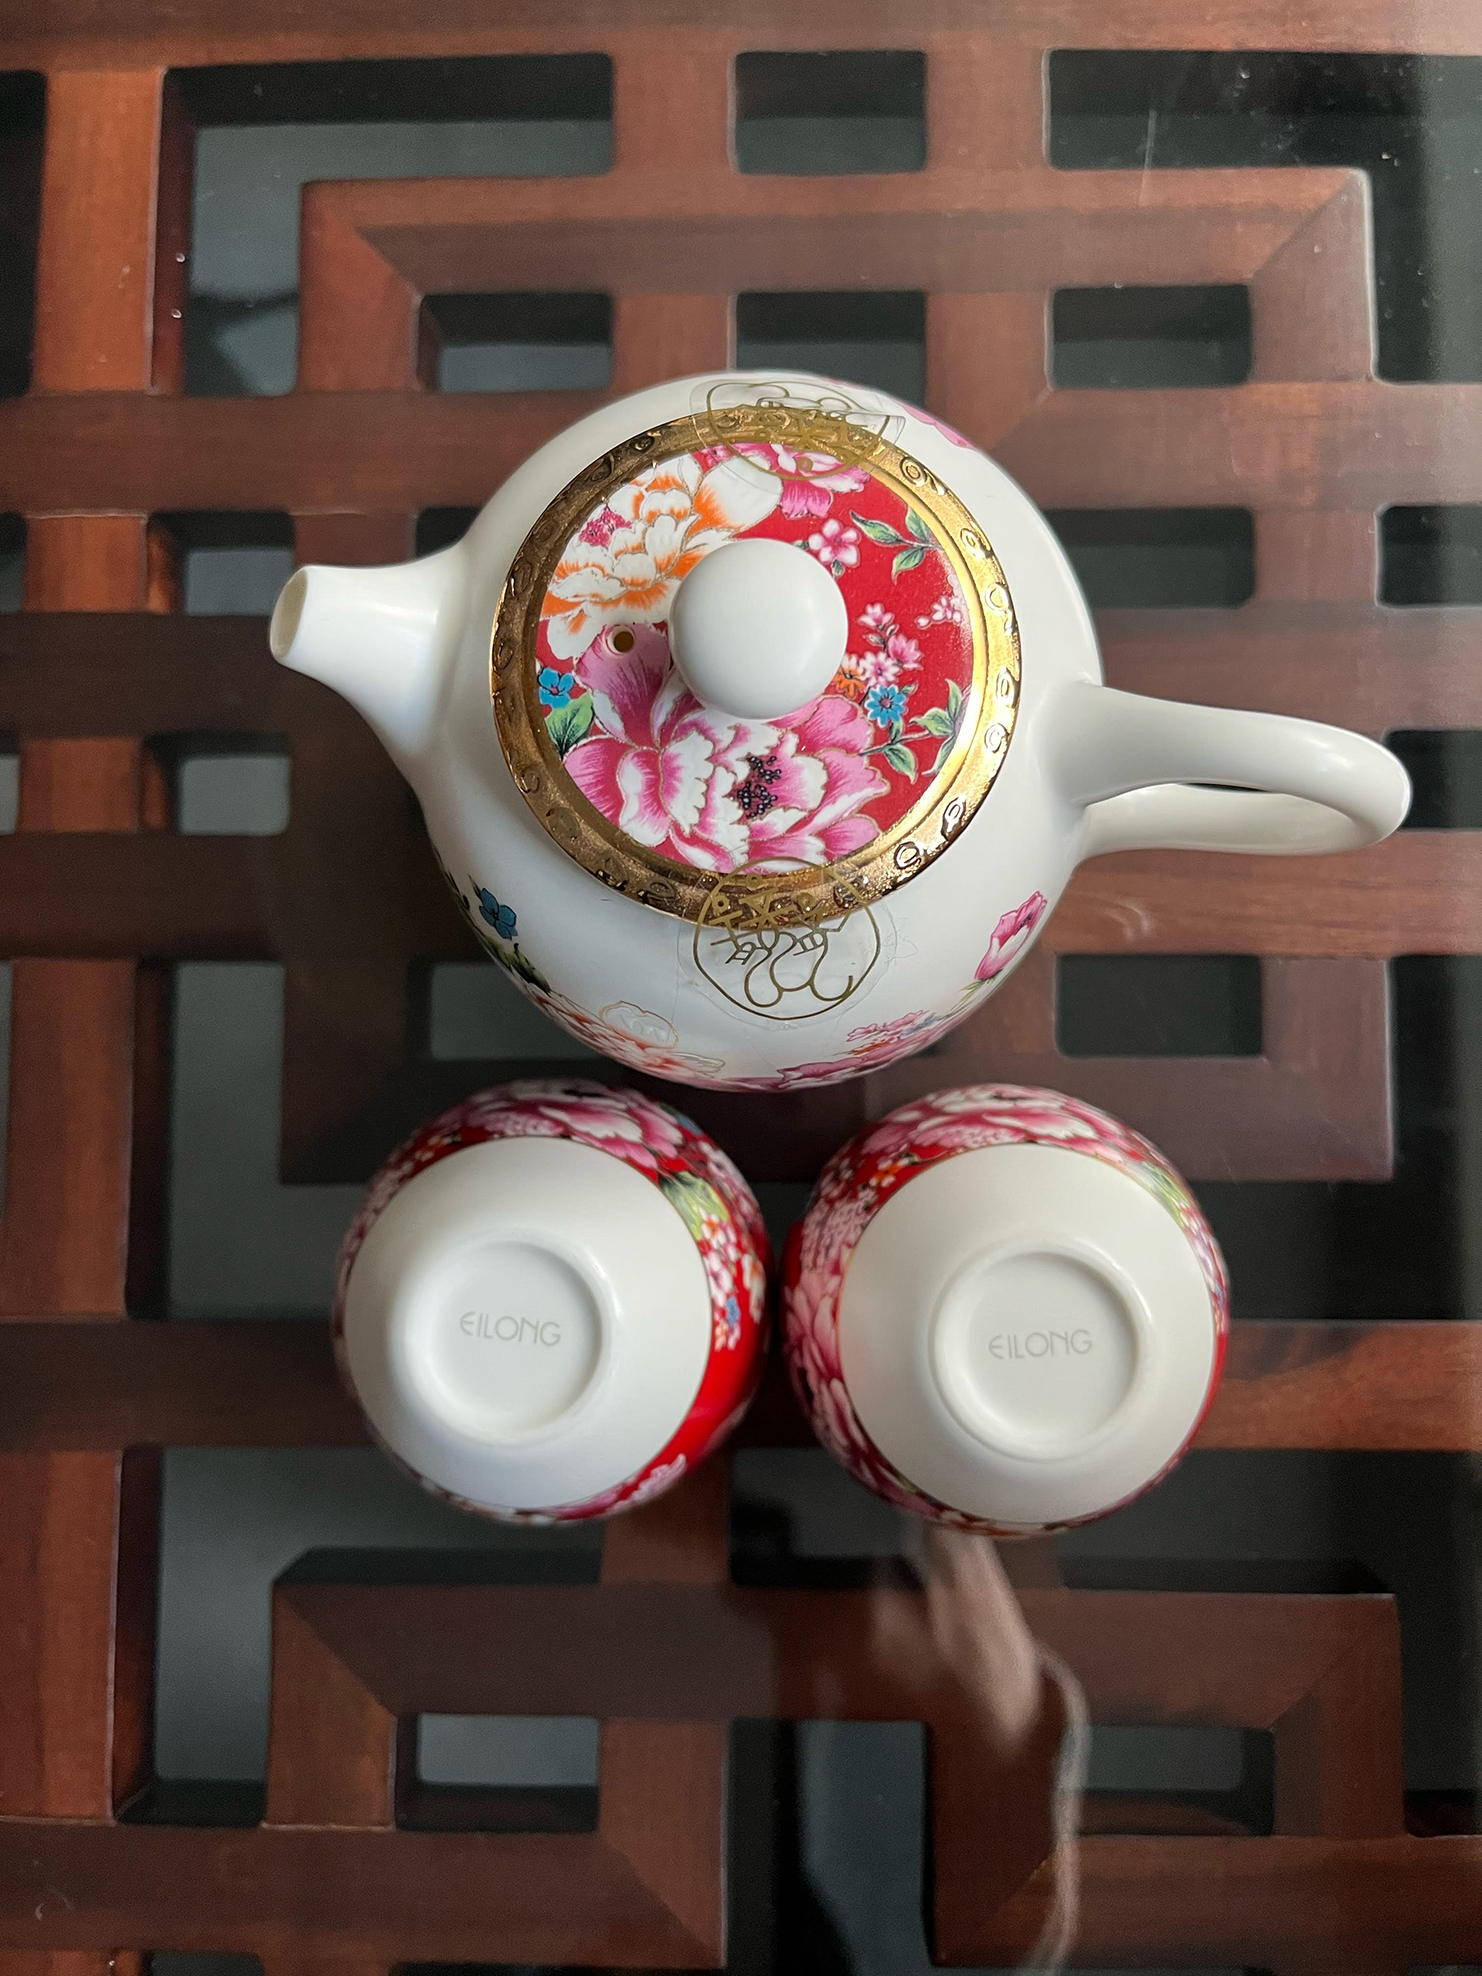 Eilong 花柄茶器セット | 台湾茶茶藝館・台湾茶カフェ 狐月庵